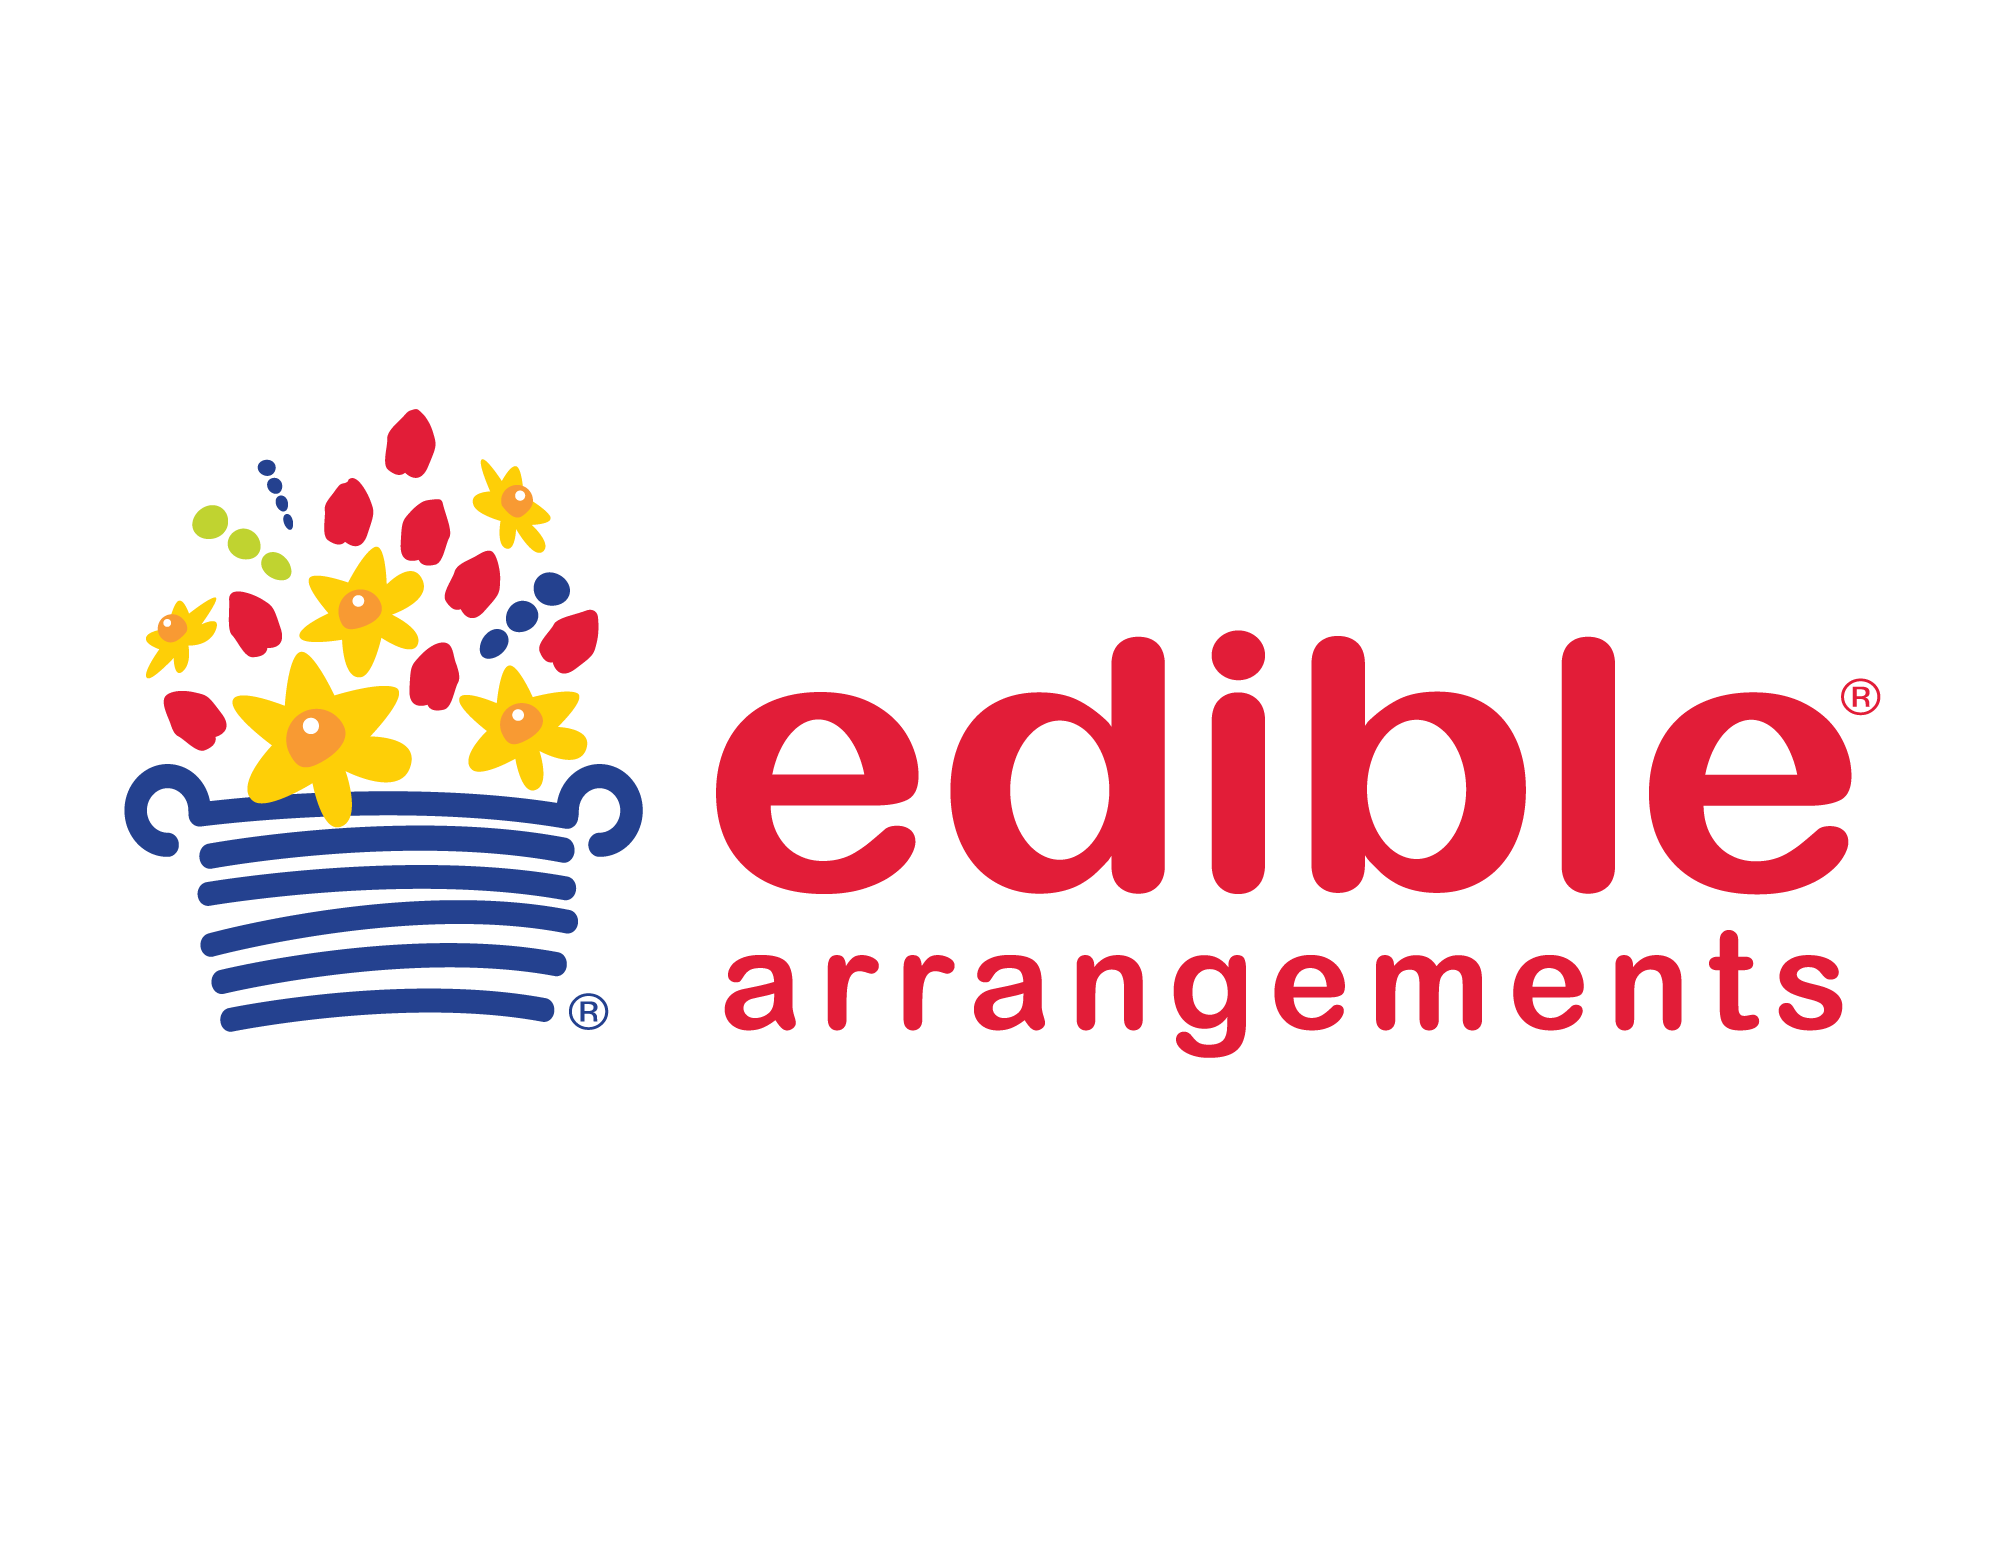 edible-arrangements-logo.png